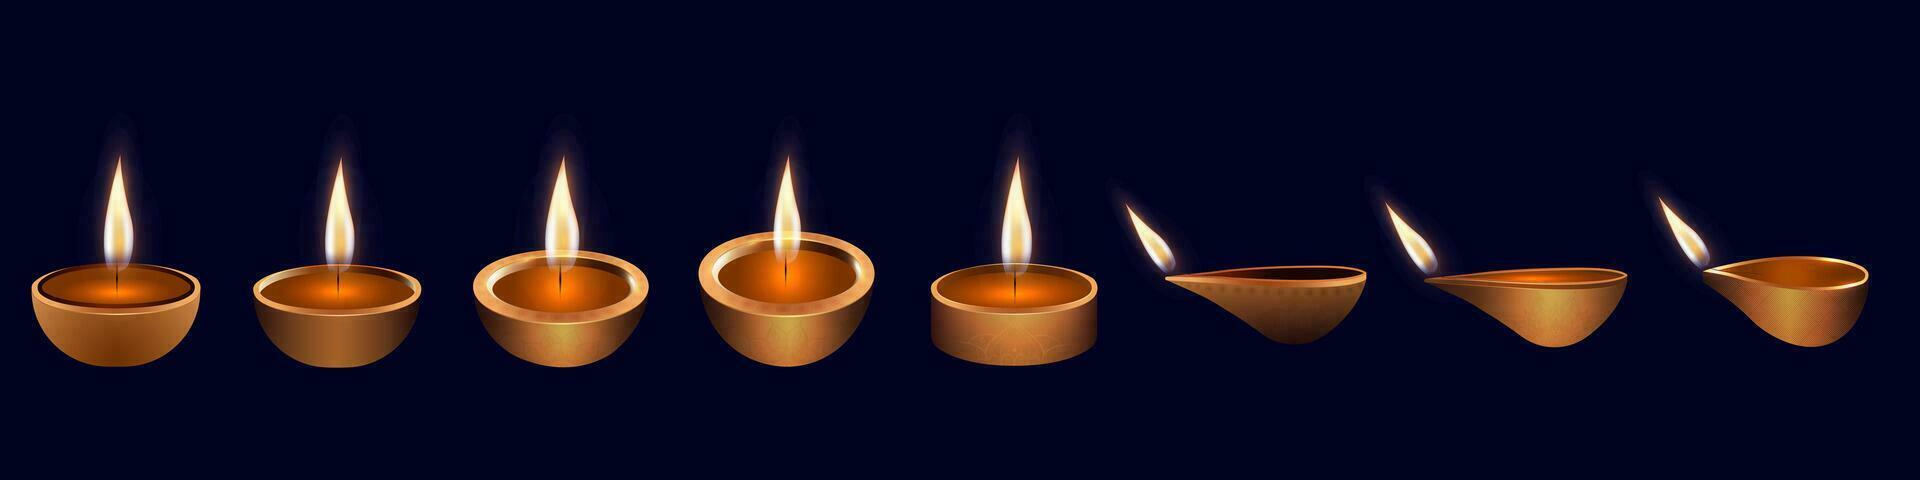 gelukkig diwali festival element diya lamp crackers lucht lantaarn fanus vuurwerk bhia dooj vector